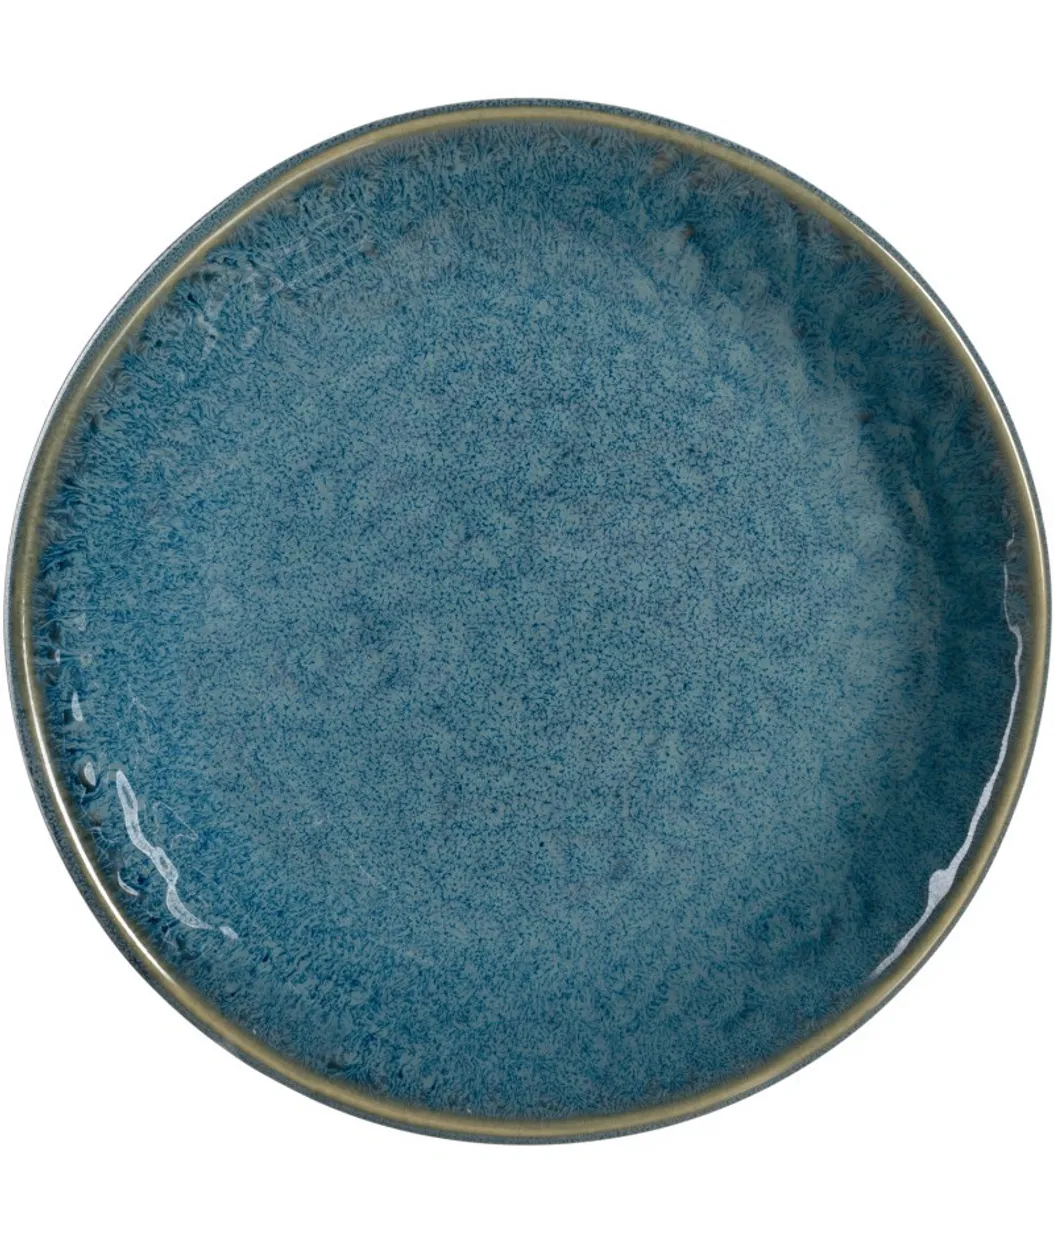 Bordje / kommetje 16 cm Matera - blauw